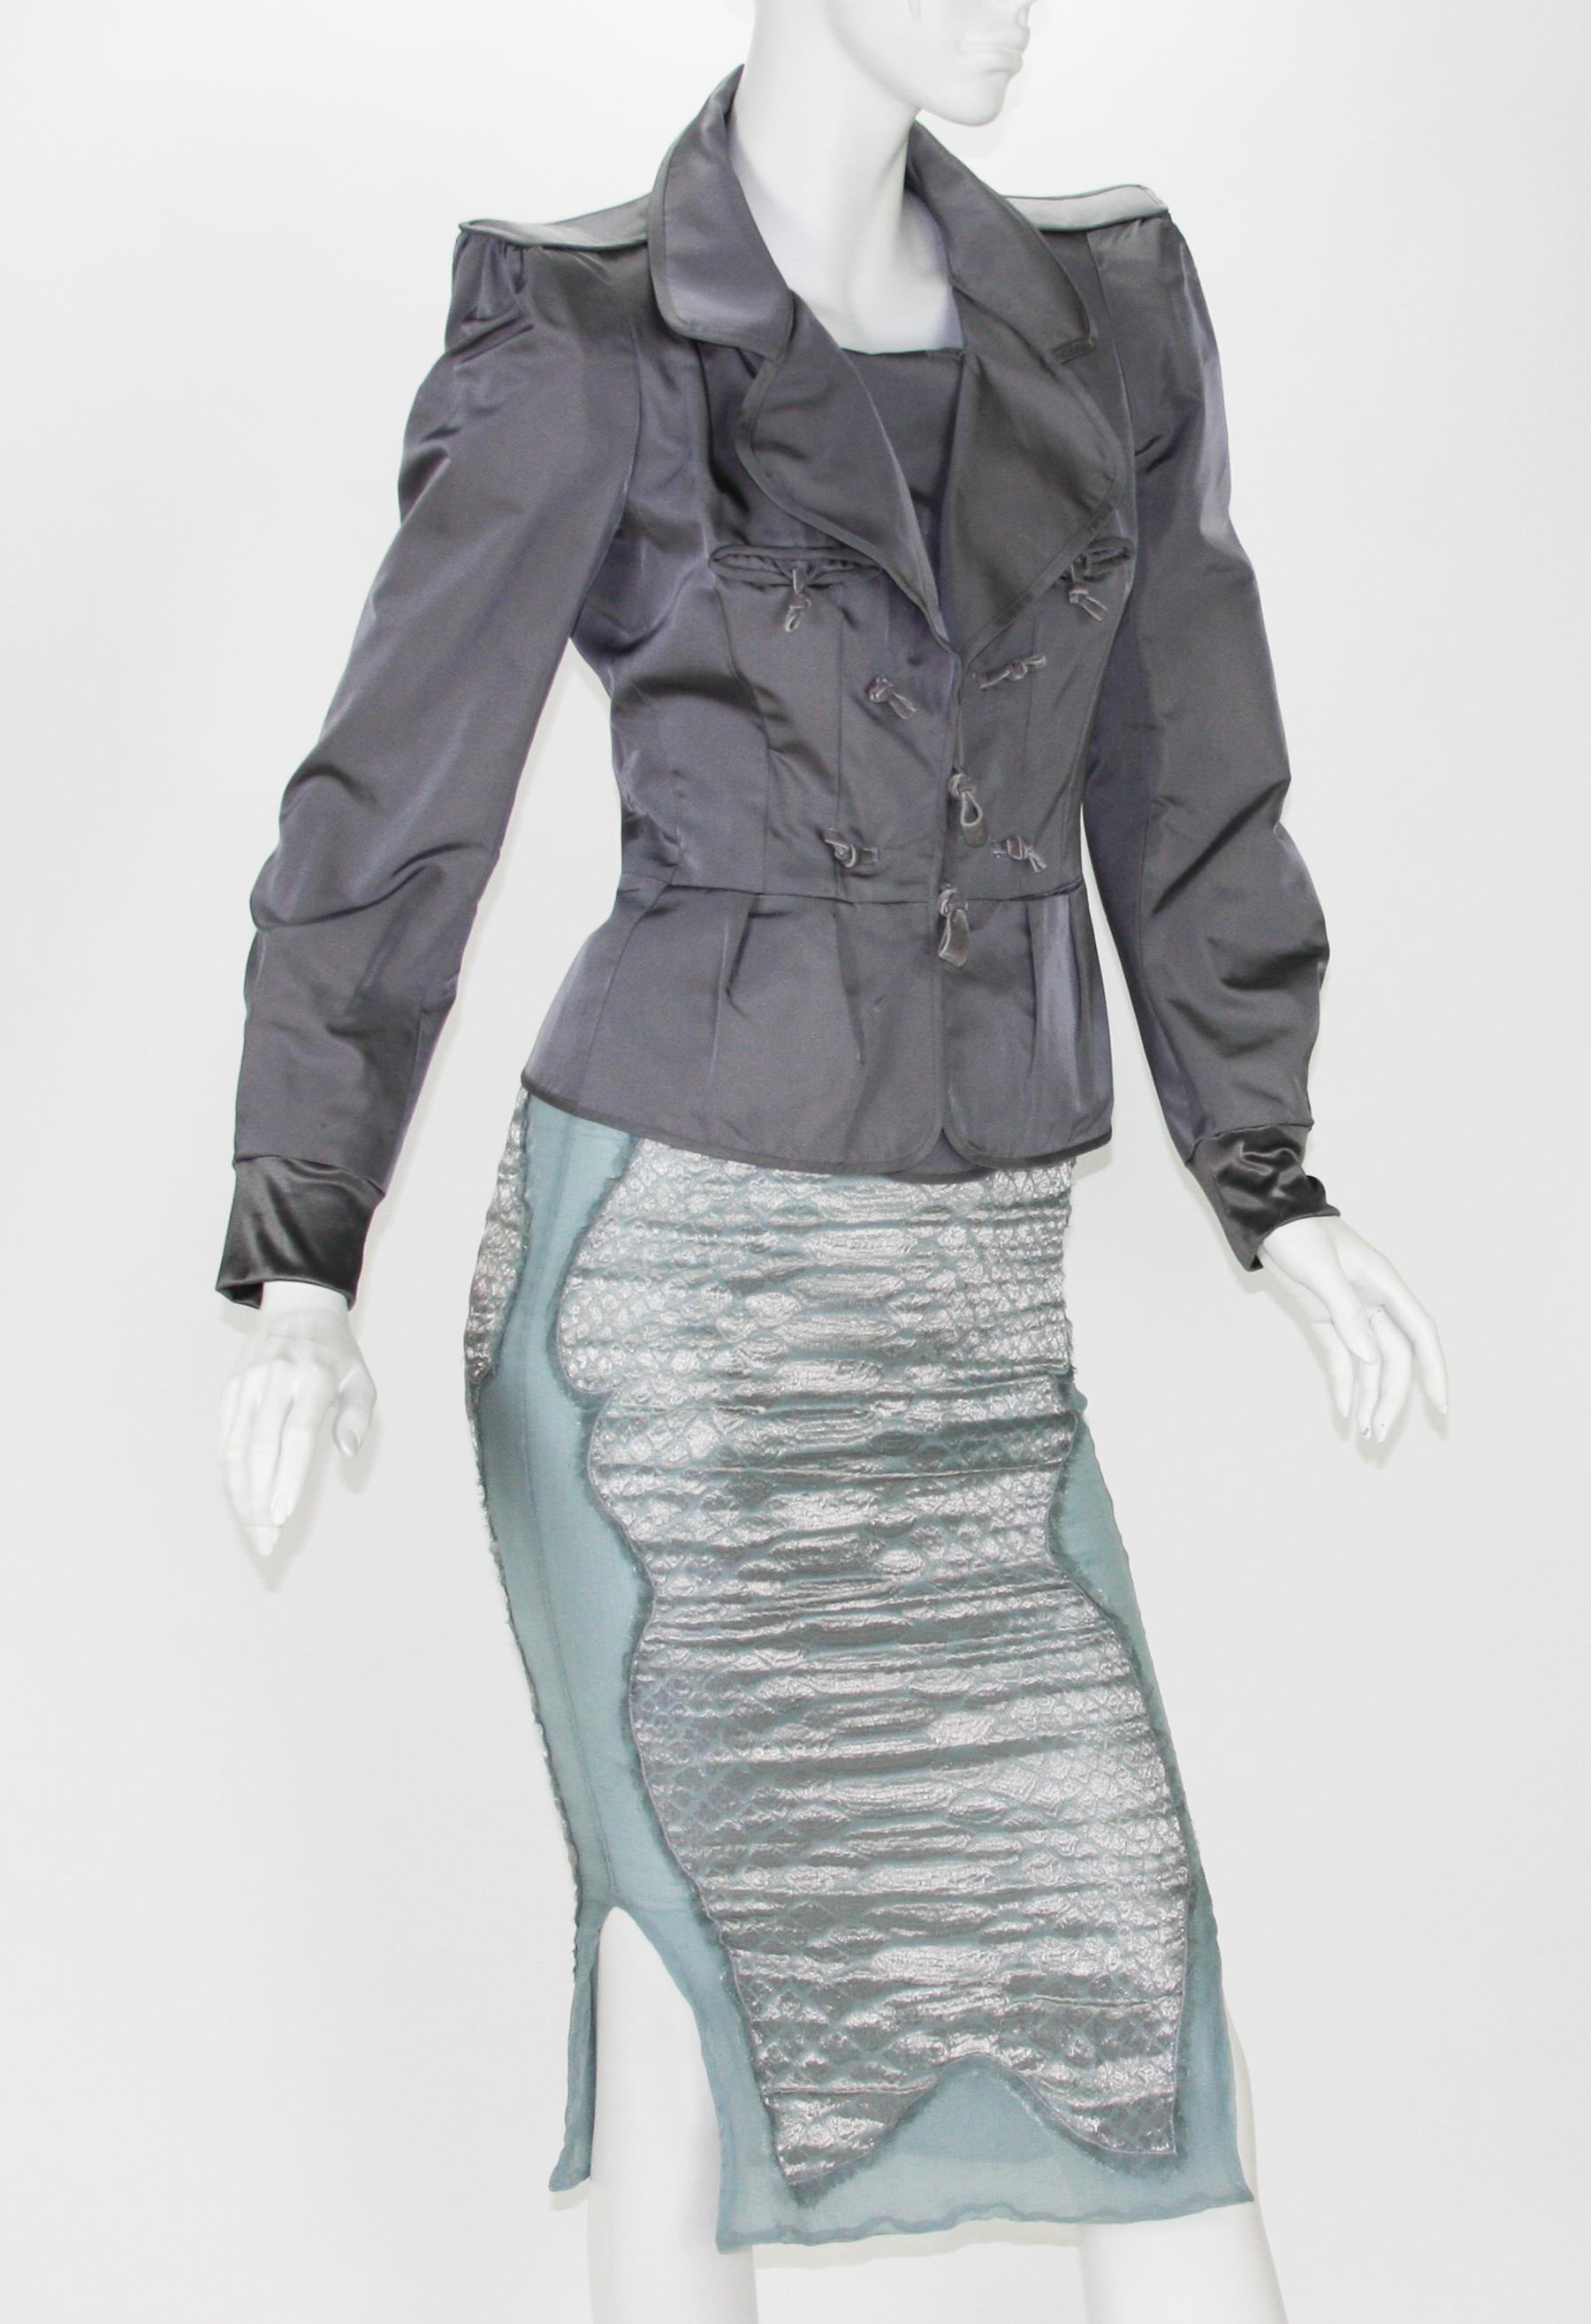 Tom Ford for Yves Saint Laurent F/W 2004 Silk Pagoda Jacket Skirt Suit Fr 38 - 6 For Sale 2